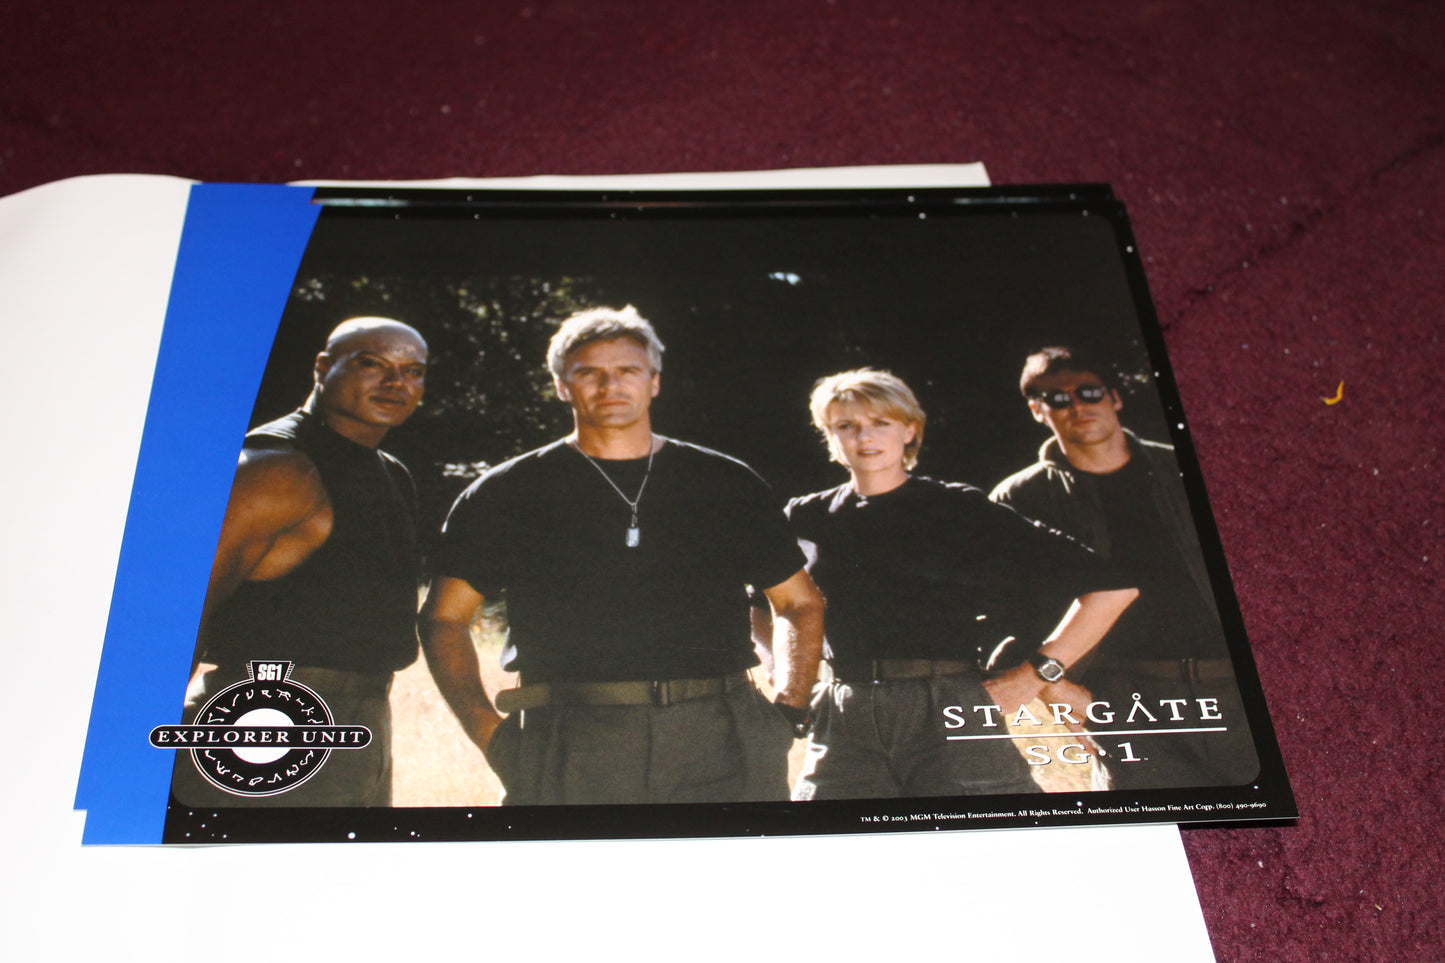 Stargate SG-1 Fan Club Photos, first promo kit